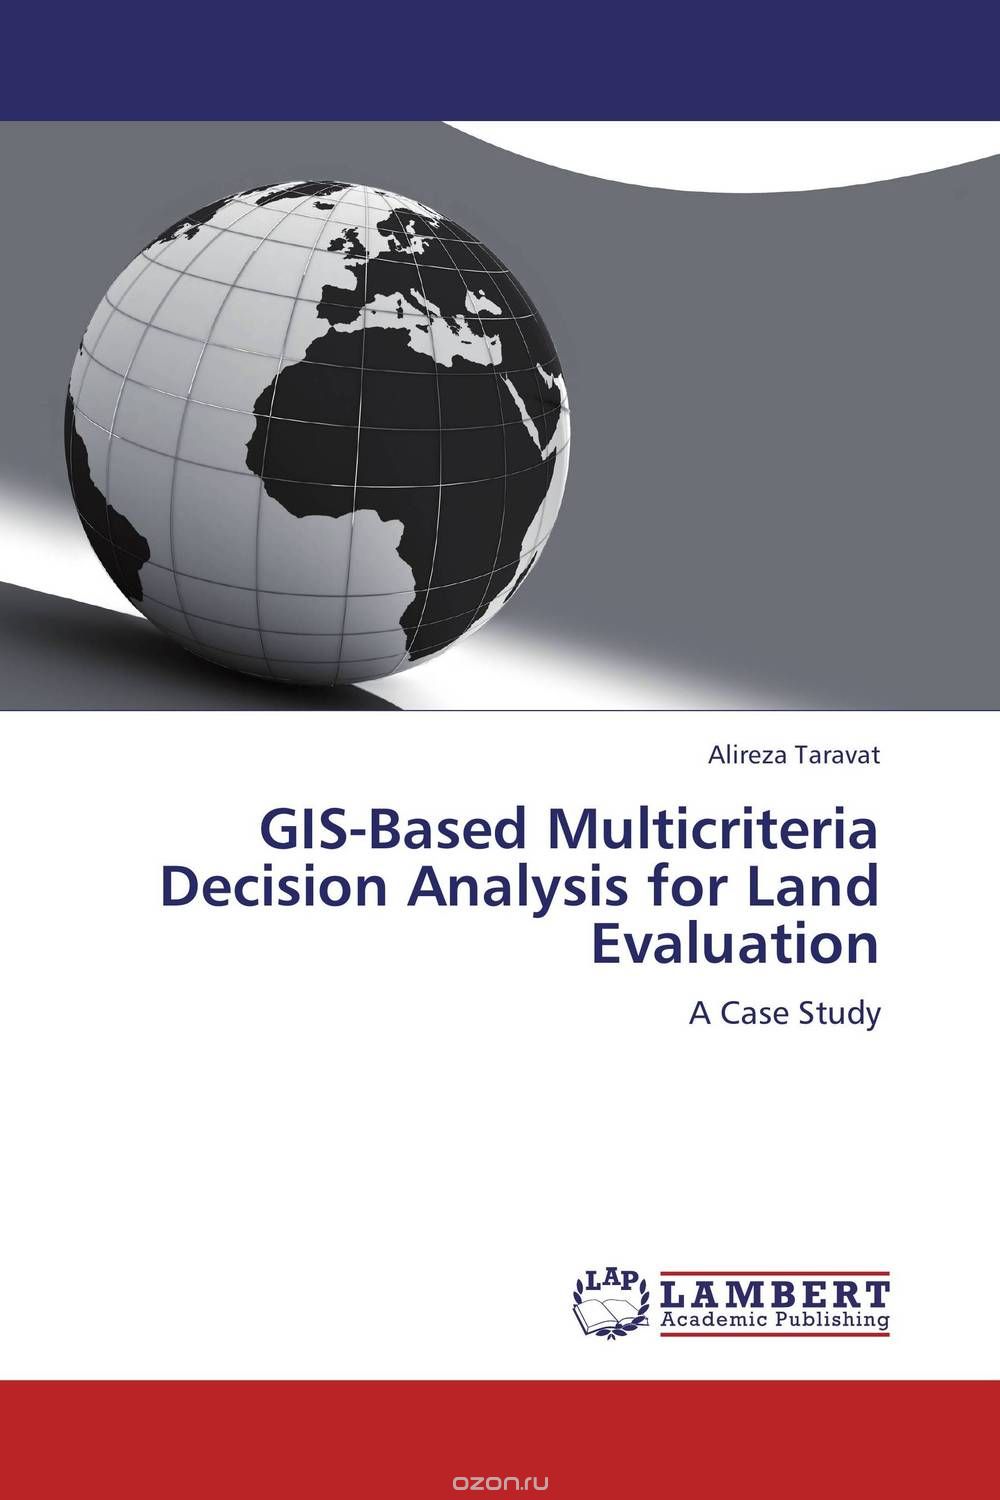 Скачать книгу "GIS-Based Multicriteria Decision Analysis for Land Evaluation"